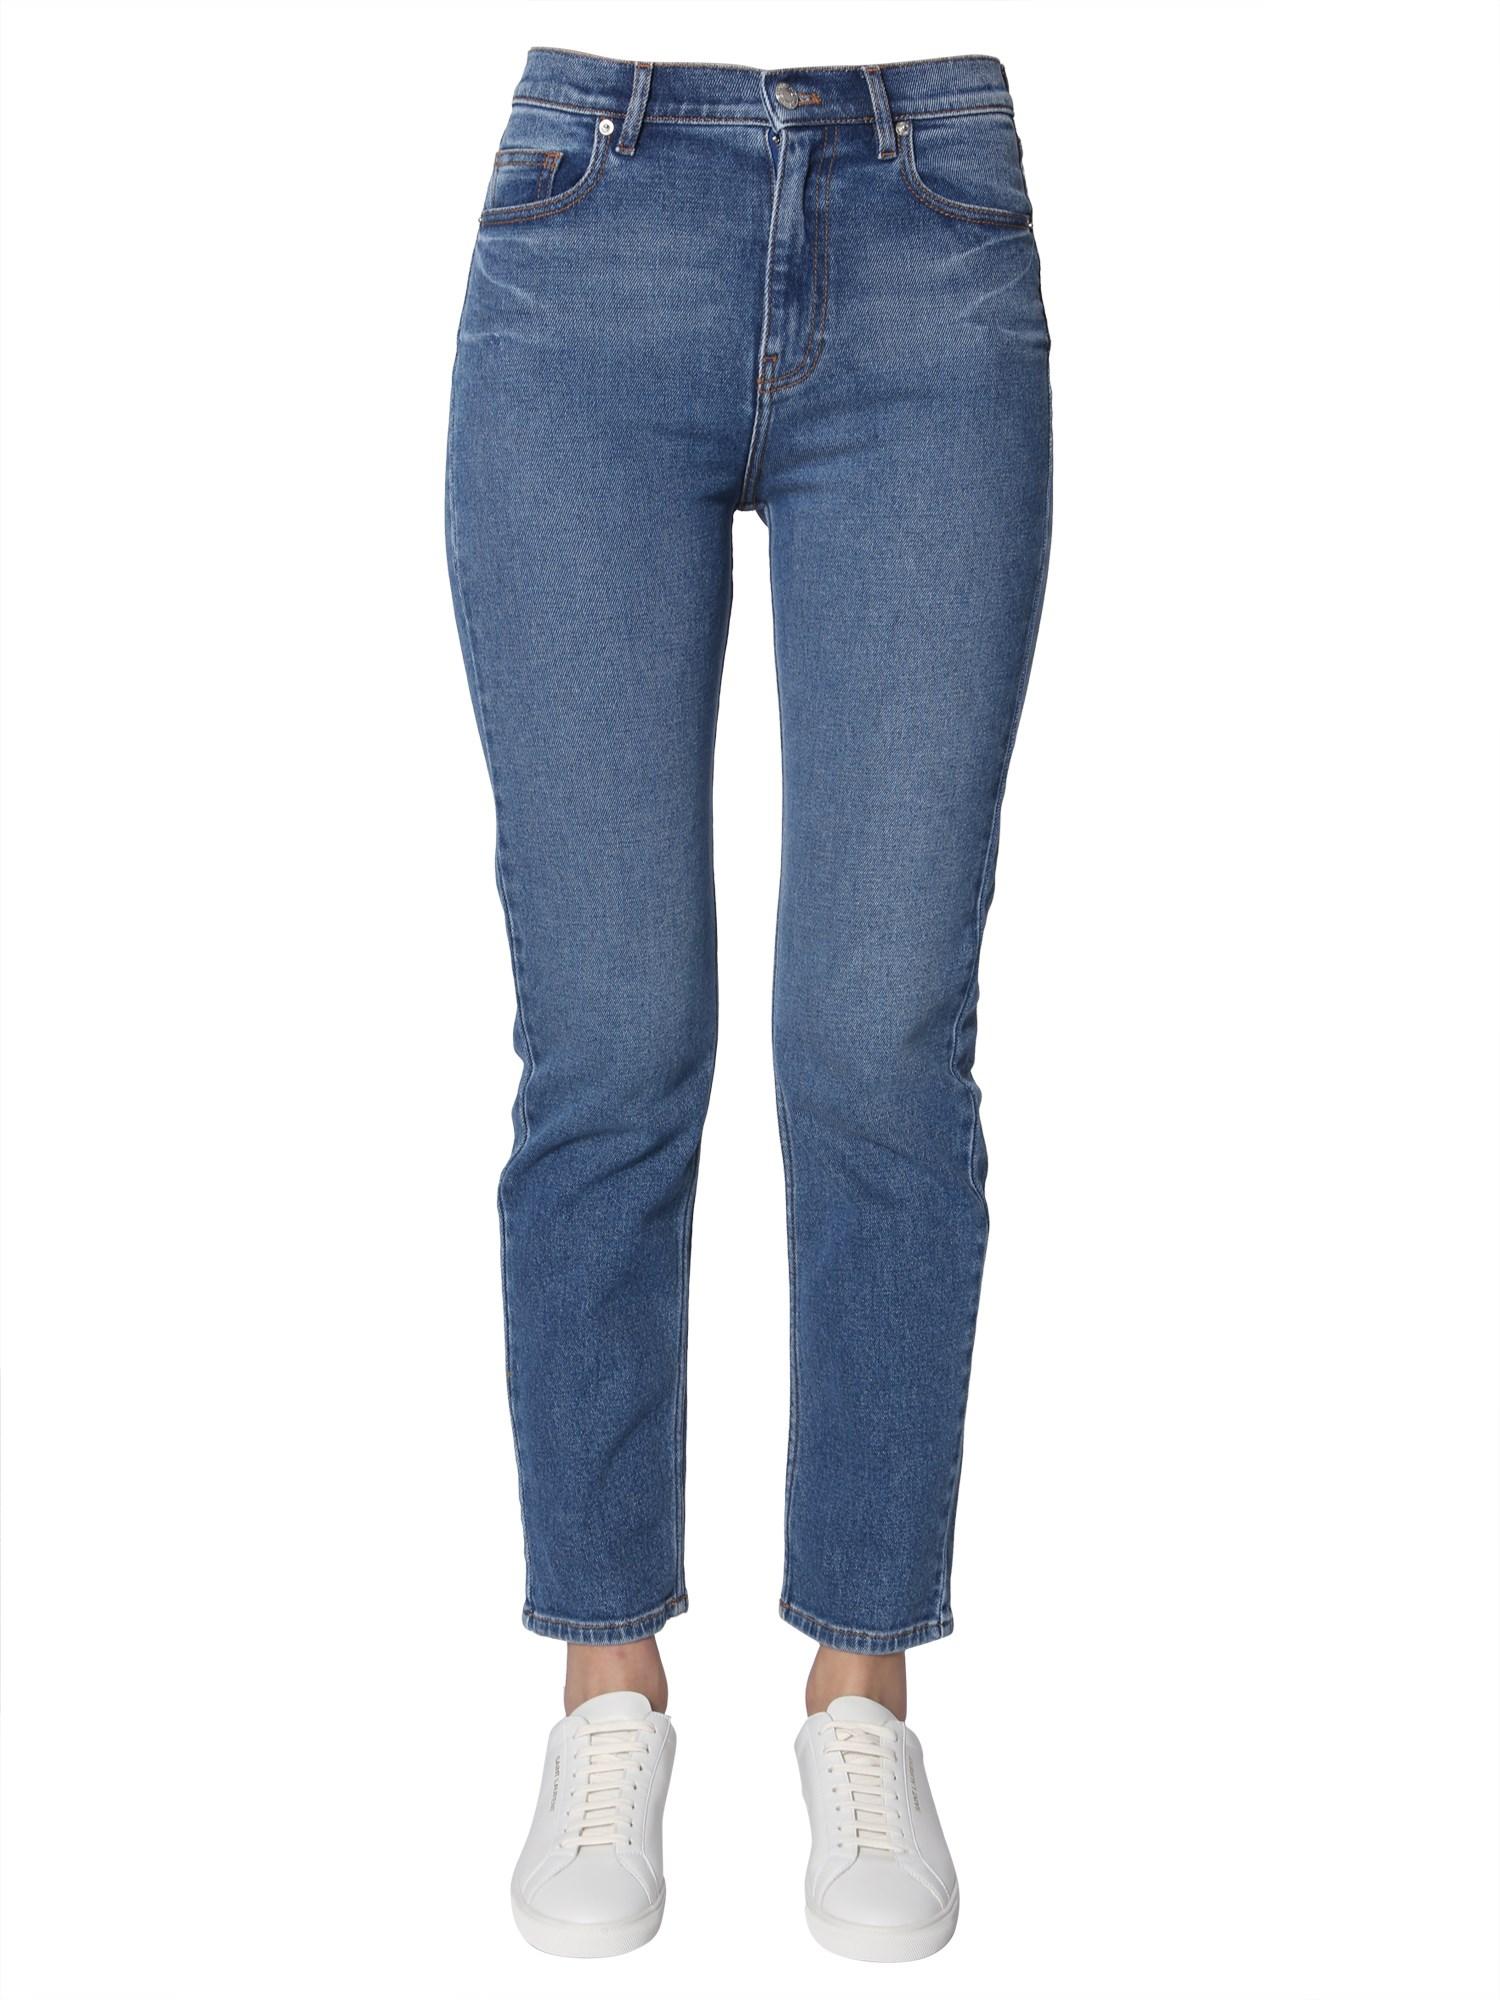 KENZO Denim High Waist Jeans in Blue - Lyst